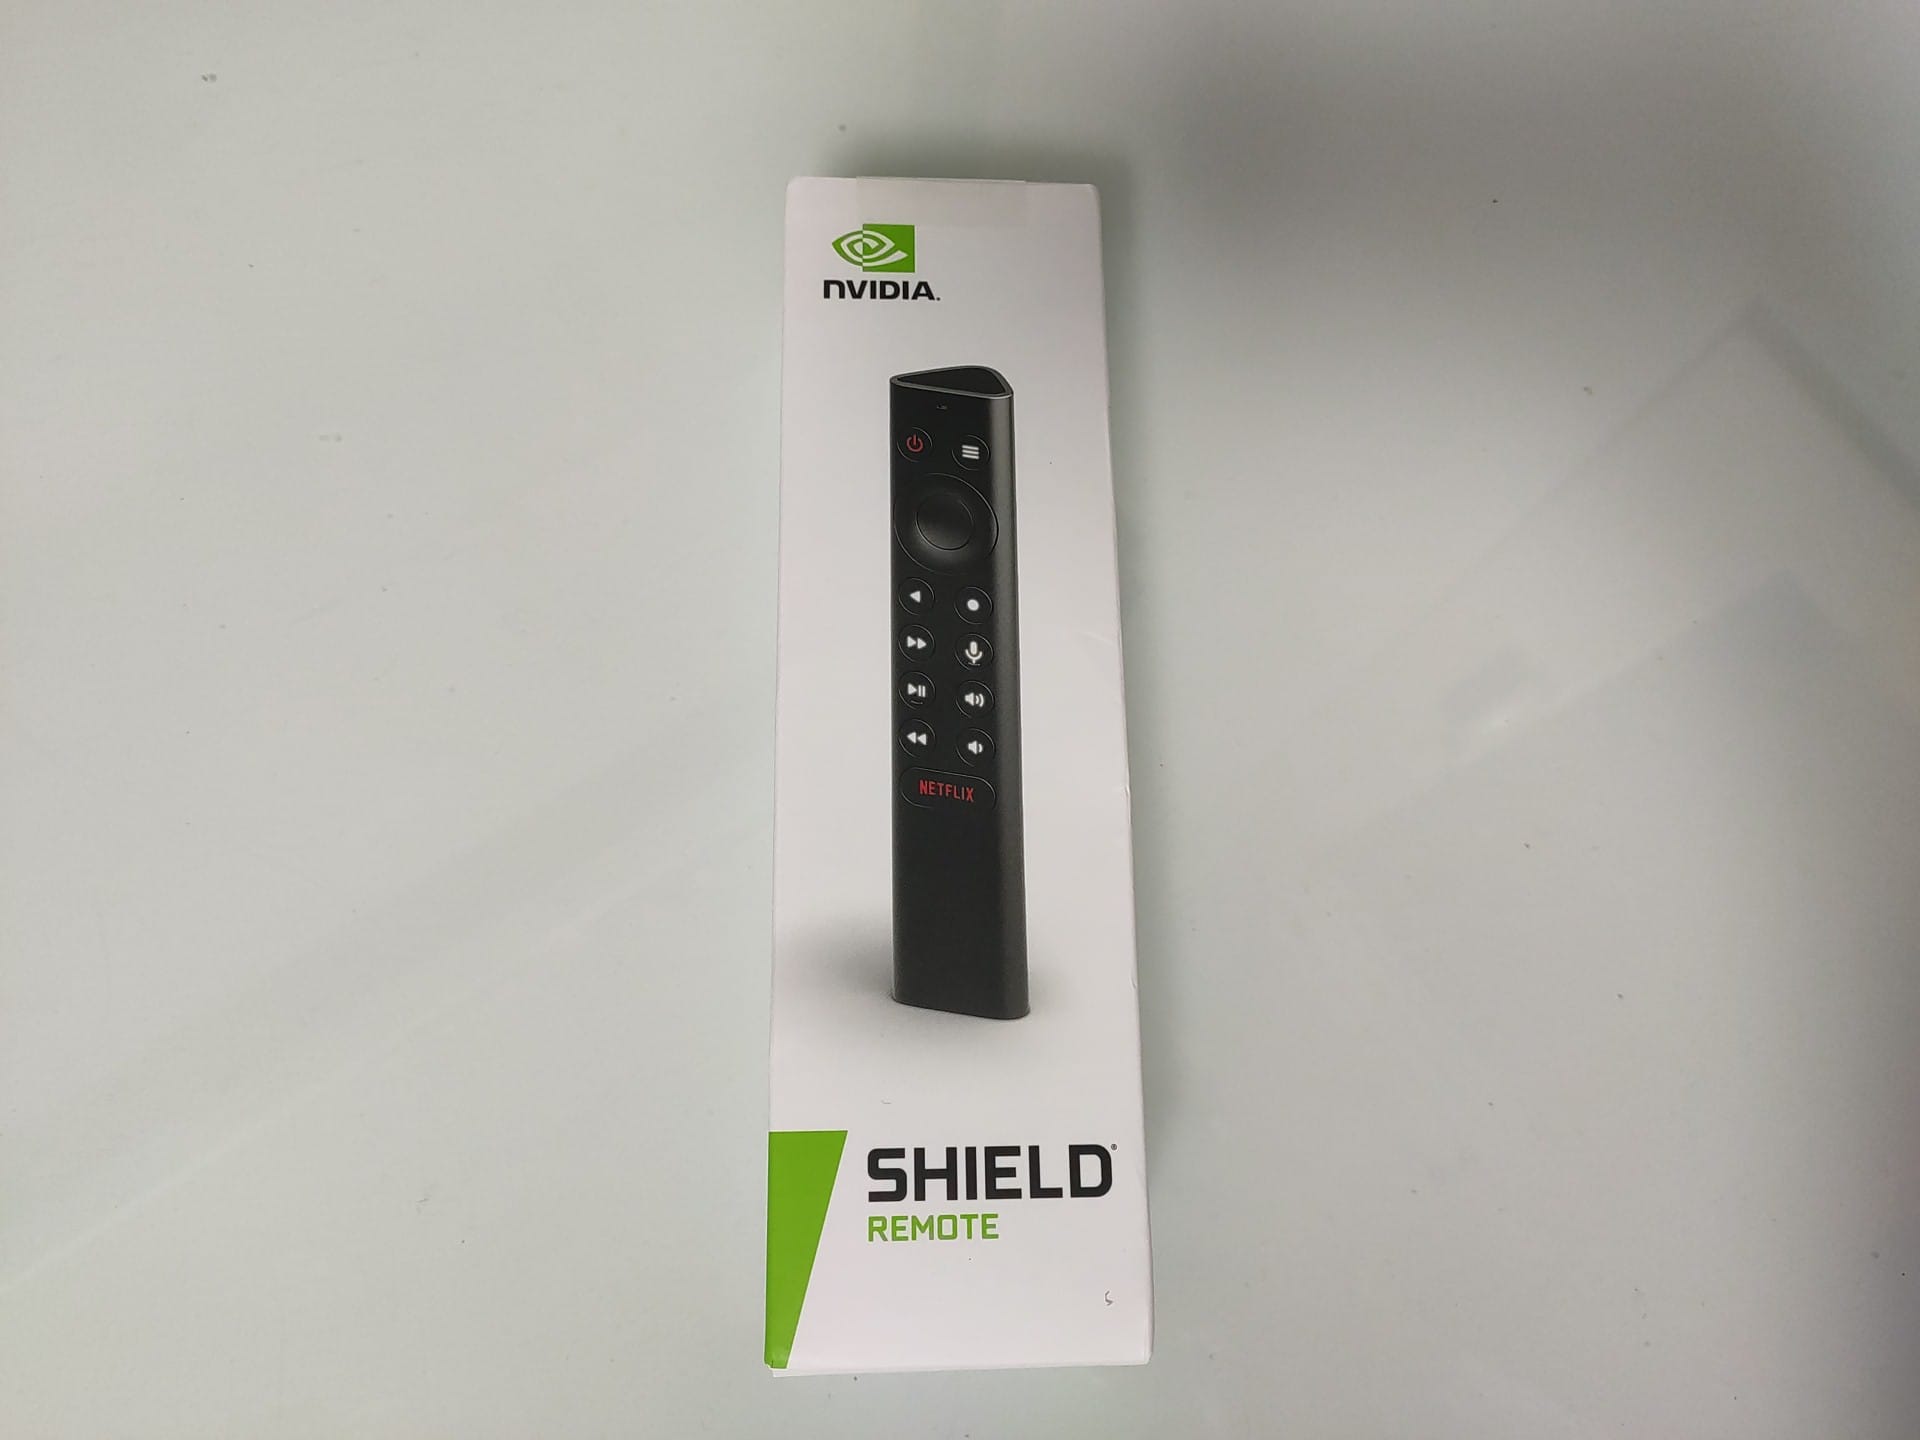 NVIDIA 쉴드 TV 2세대 - 정품 리모컨 최신버전 구매후기